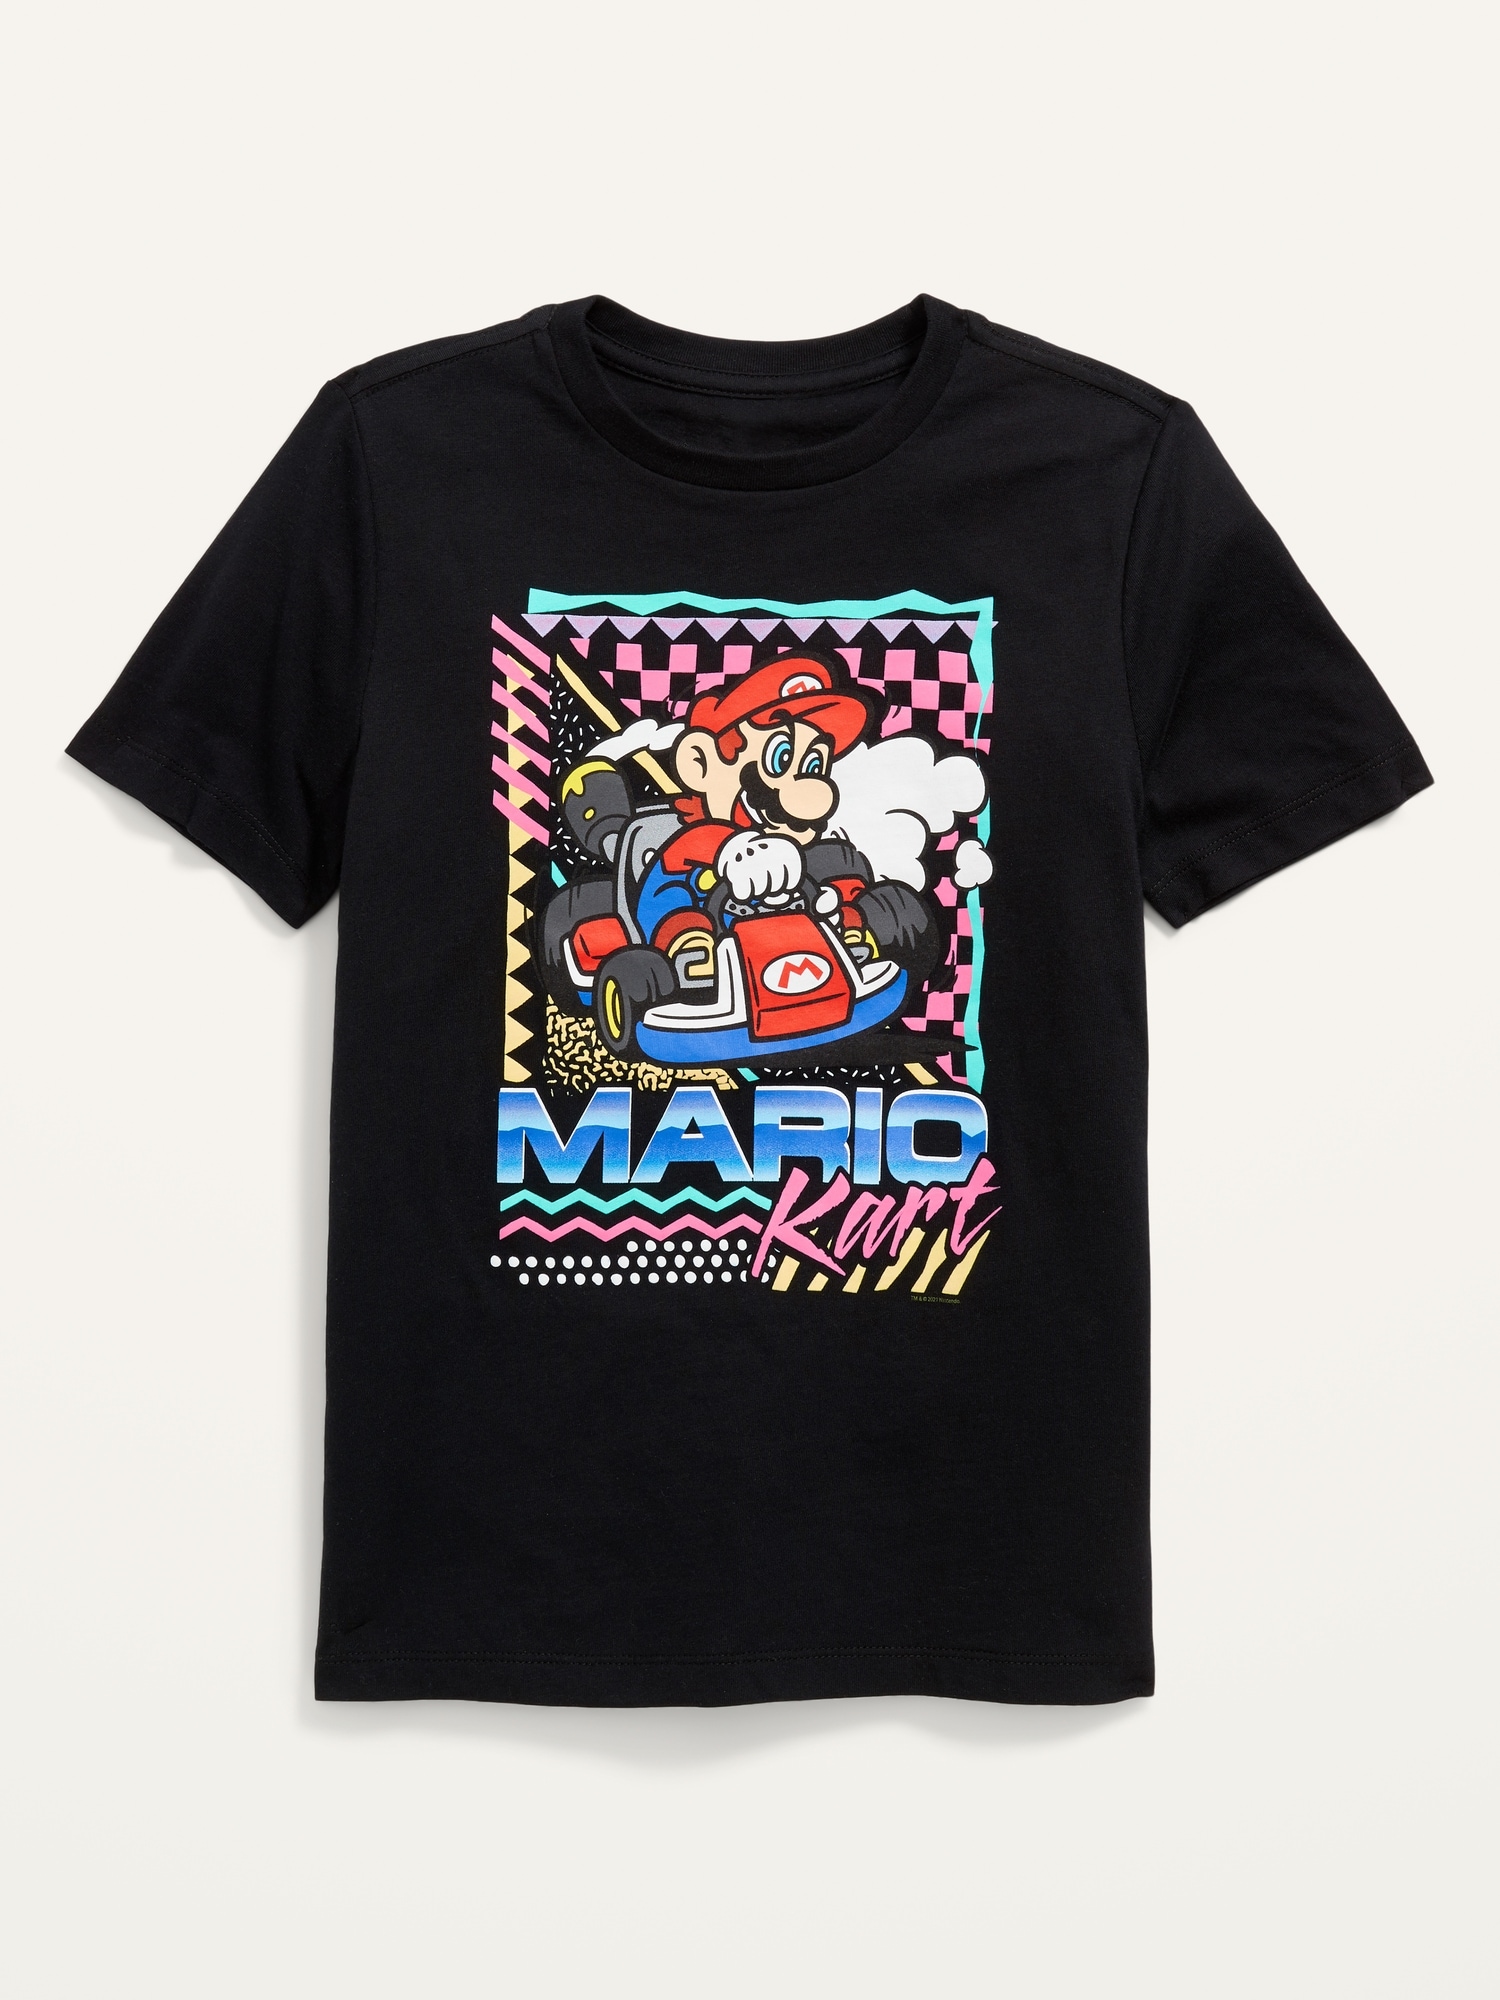 Mario Kart™ Gender-Neutral Graphic Tee for Kids | Old Navy